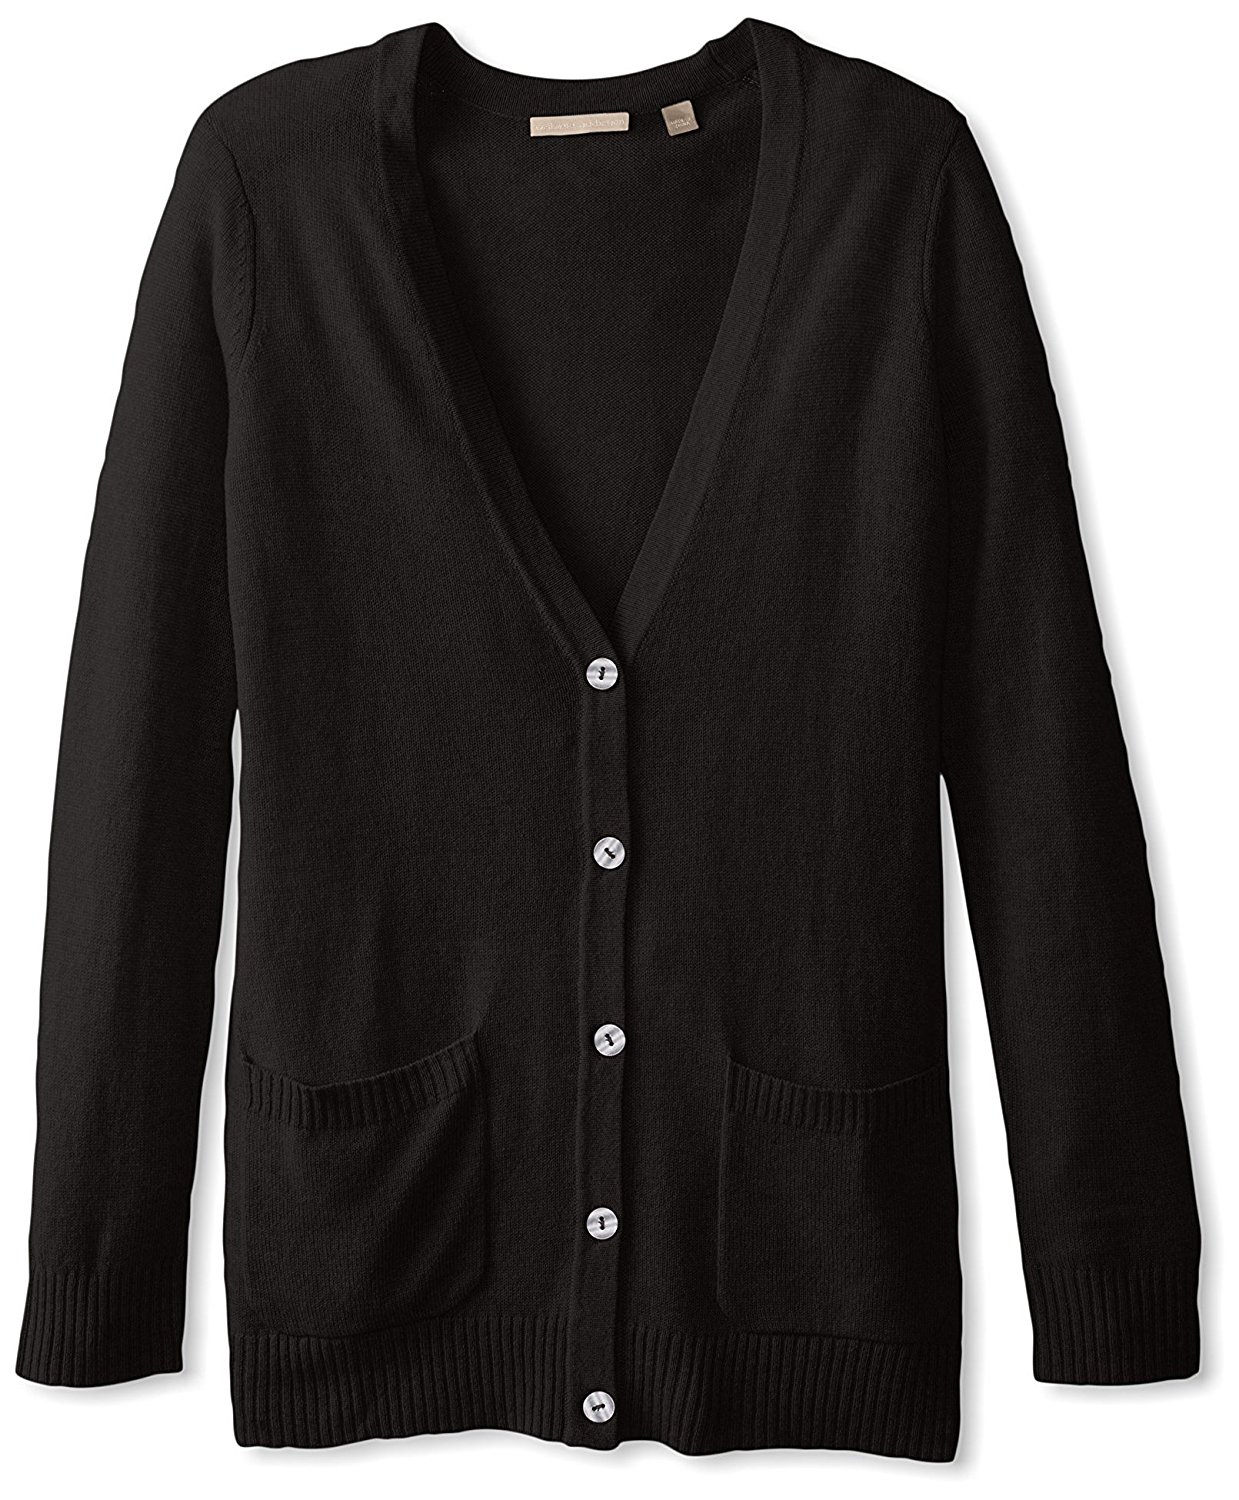 black cardigan amazon.com: cashmere addiction womenu0027s button down boyfriend cardigan  sweater: clothing kbhcmgo